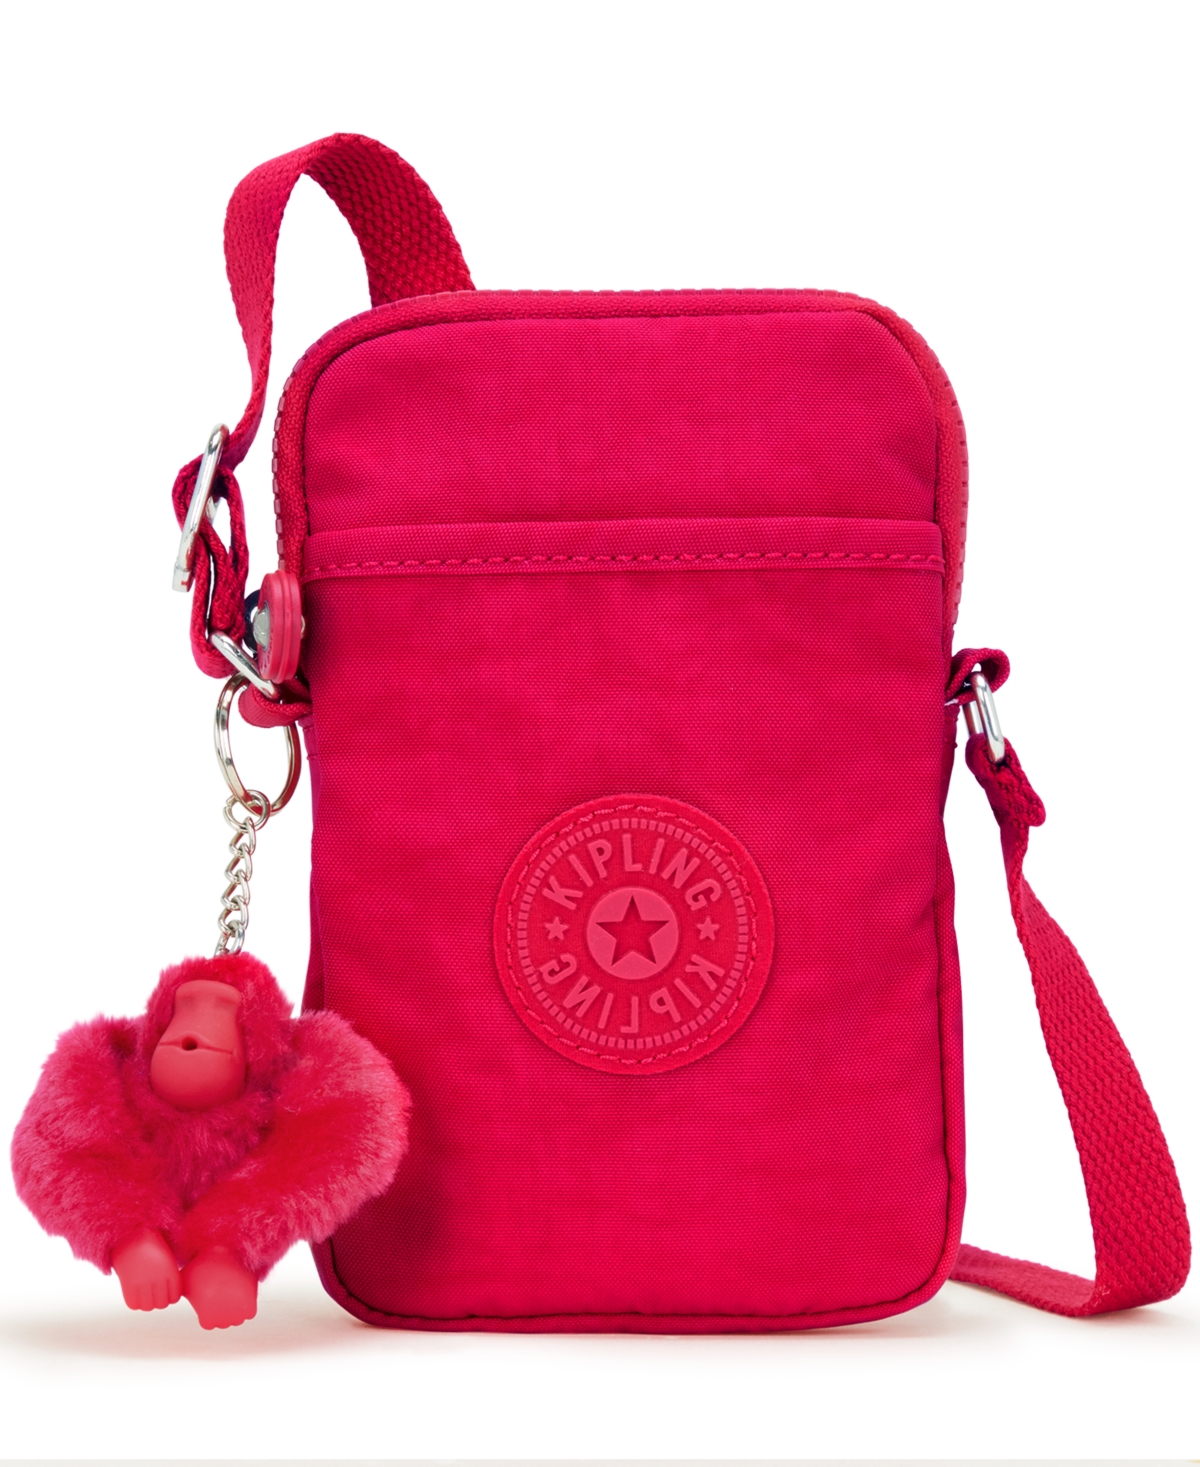 Tally Crossbody Bag - Confetti Pink